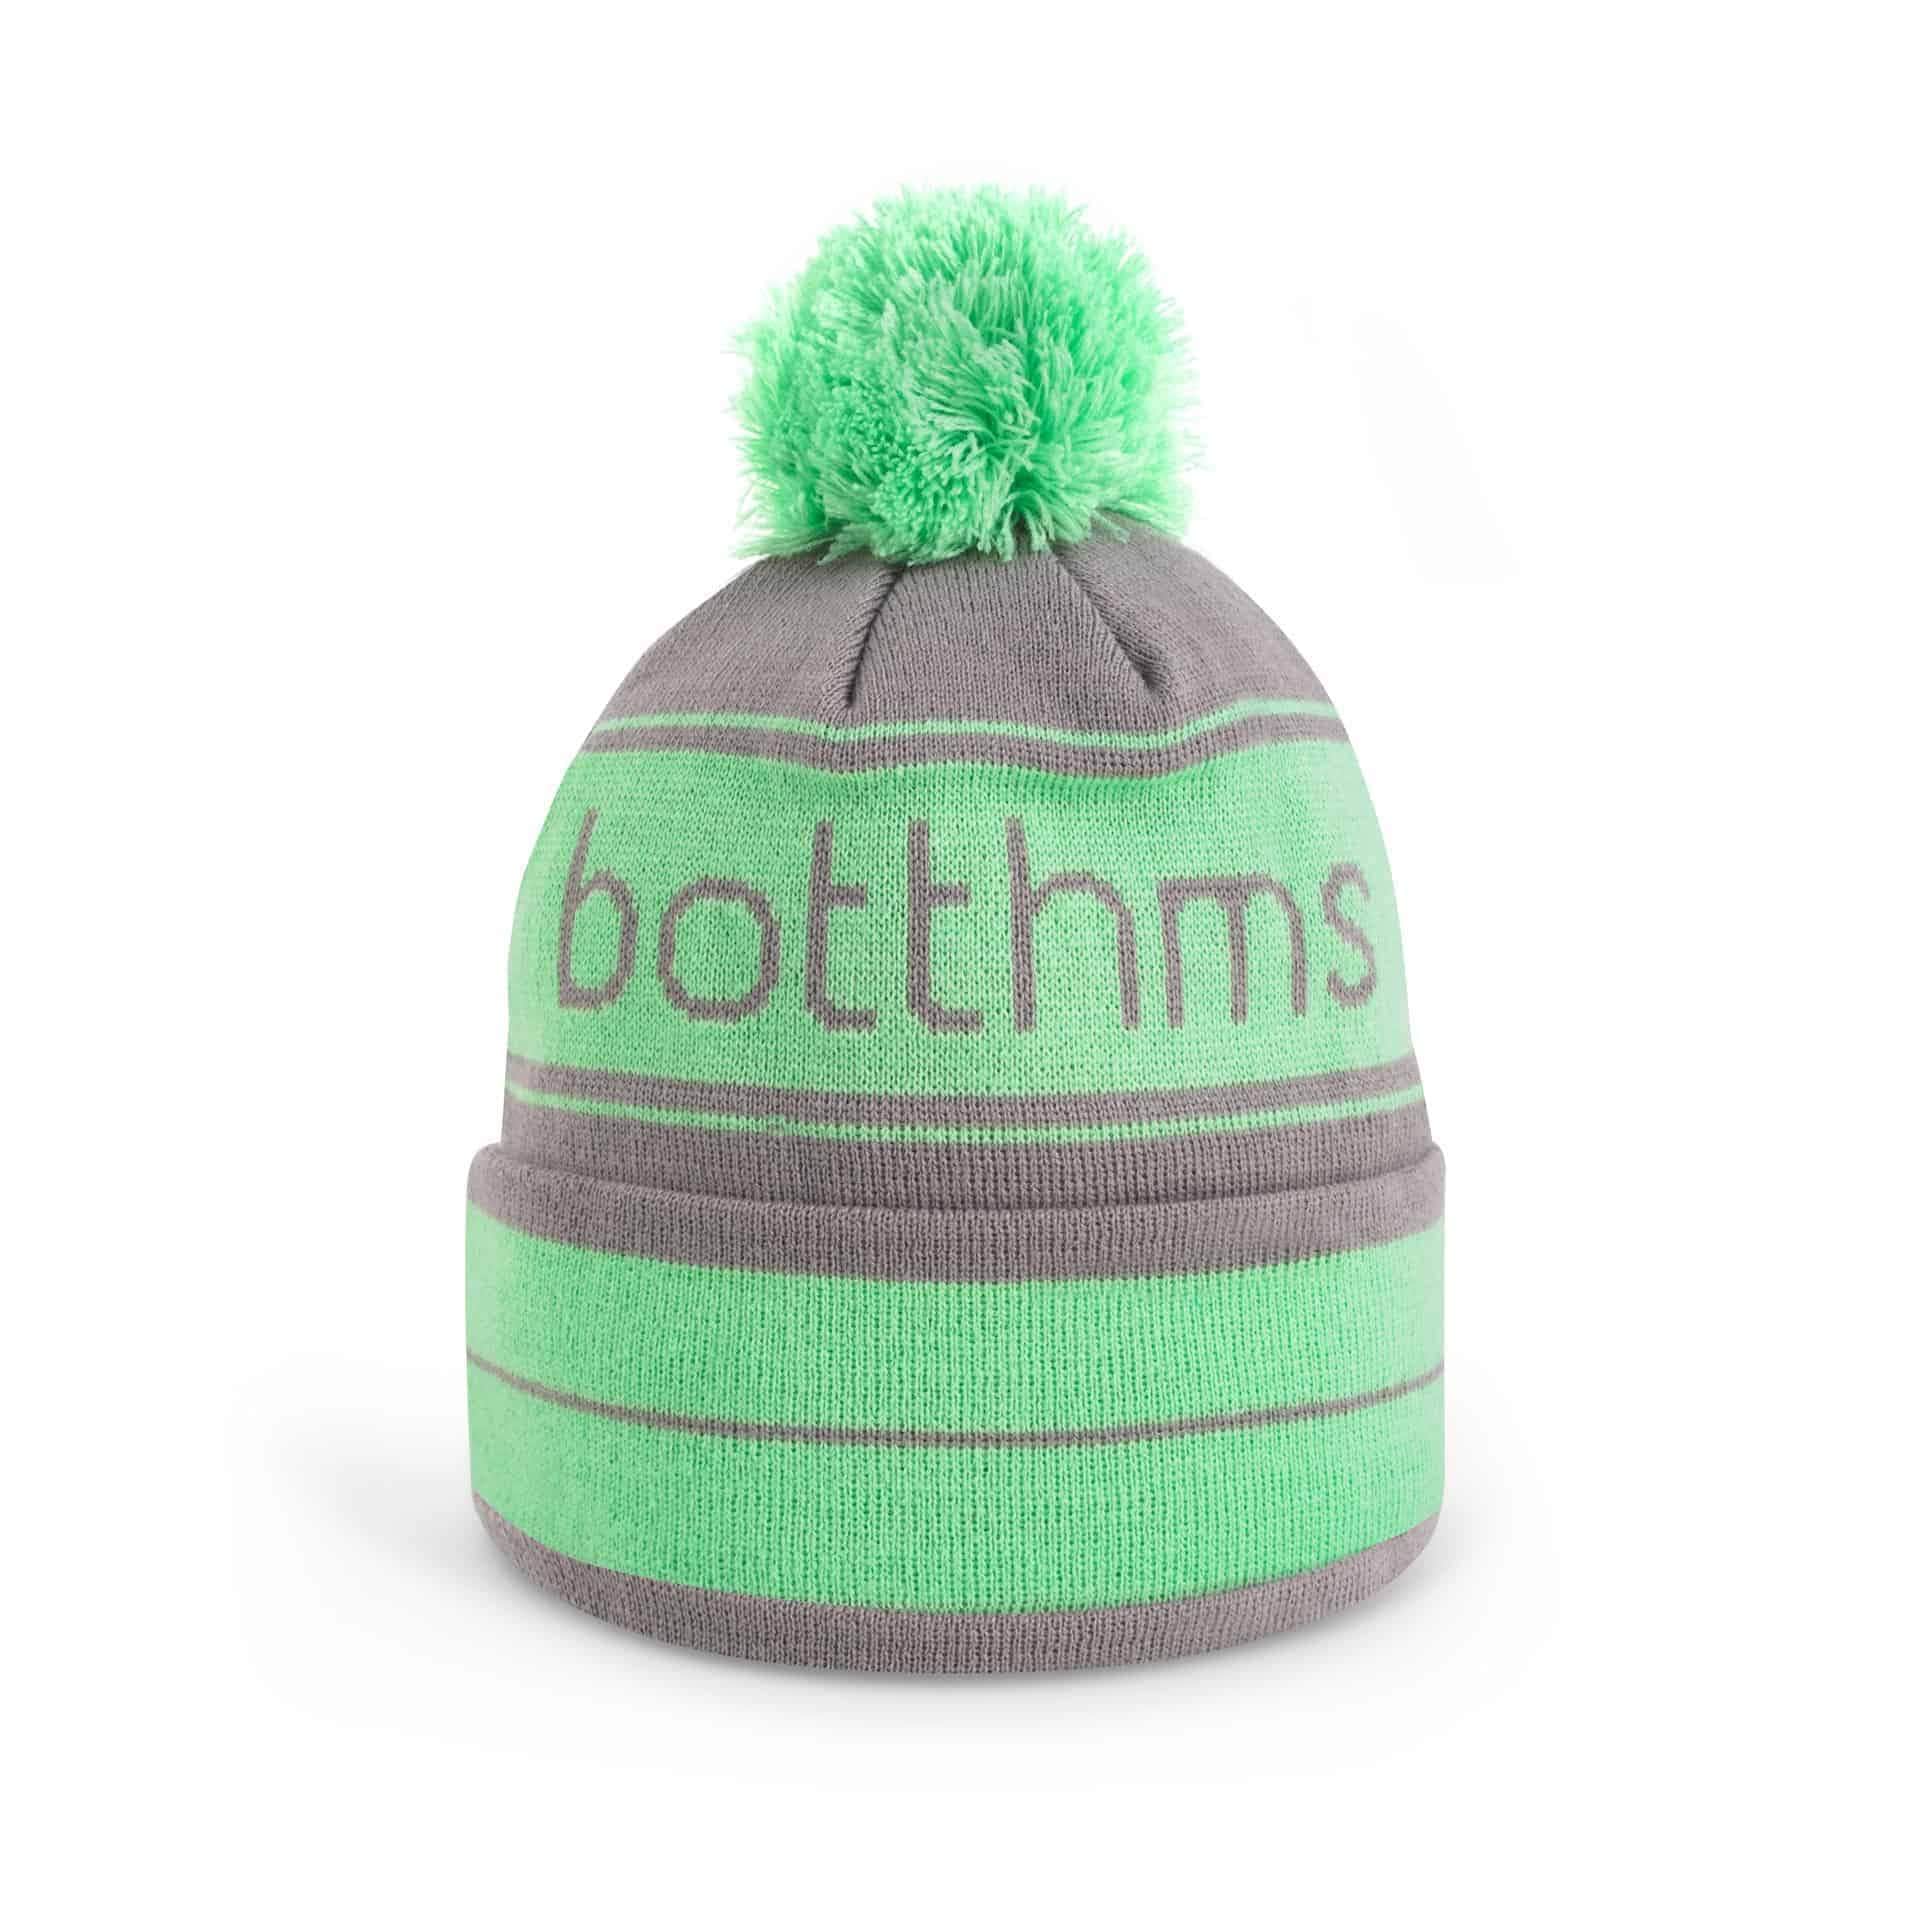 botthms botthms Beanie Green/Grey Headwear